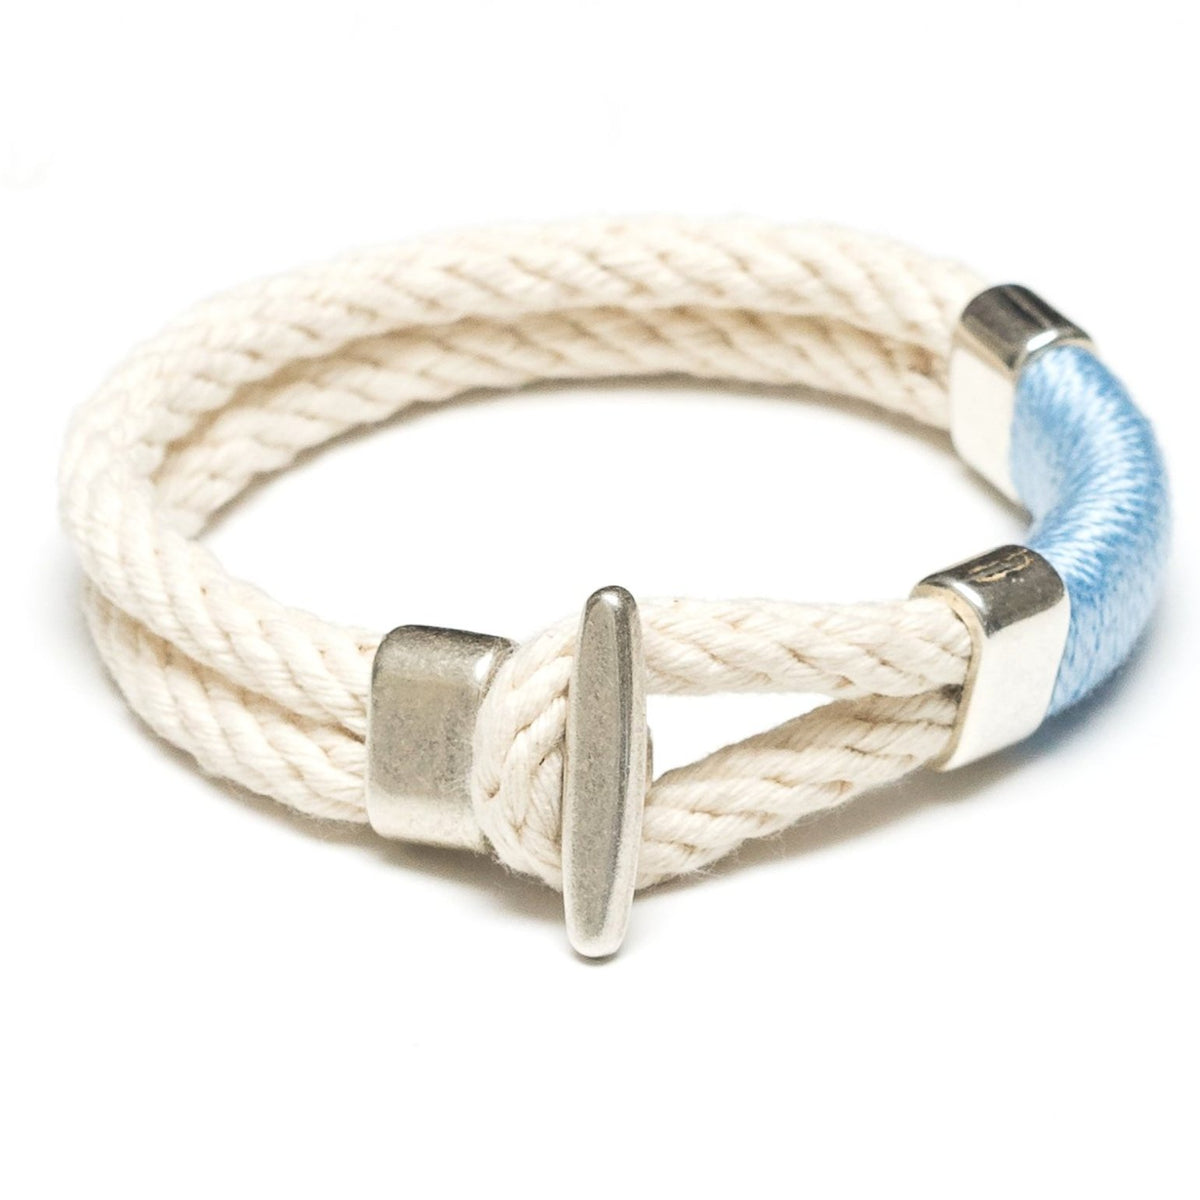 Allison Cole Jewelry - Cambridge Bracelet Ivory/ Light Blue/ Silver